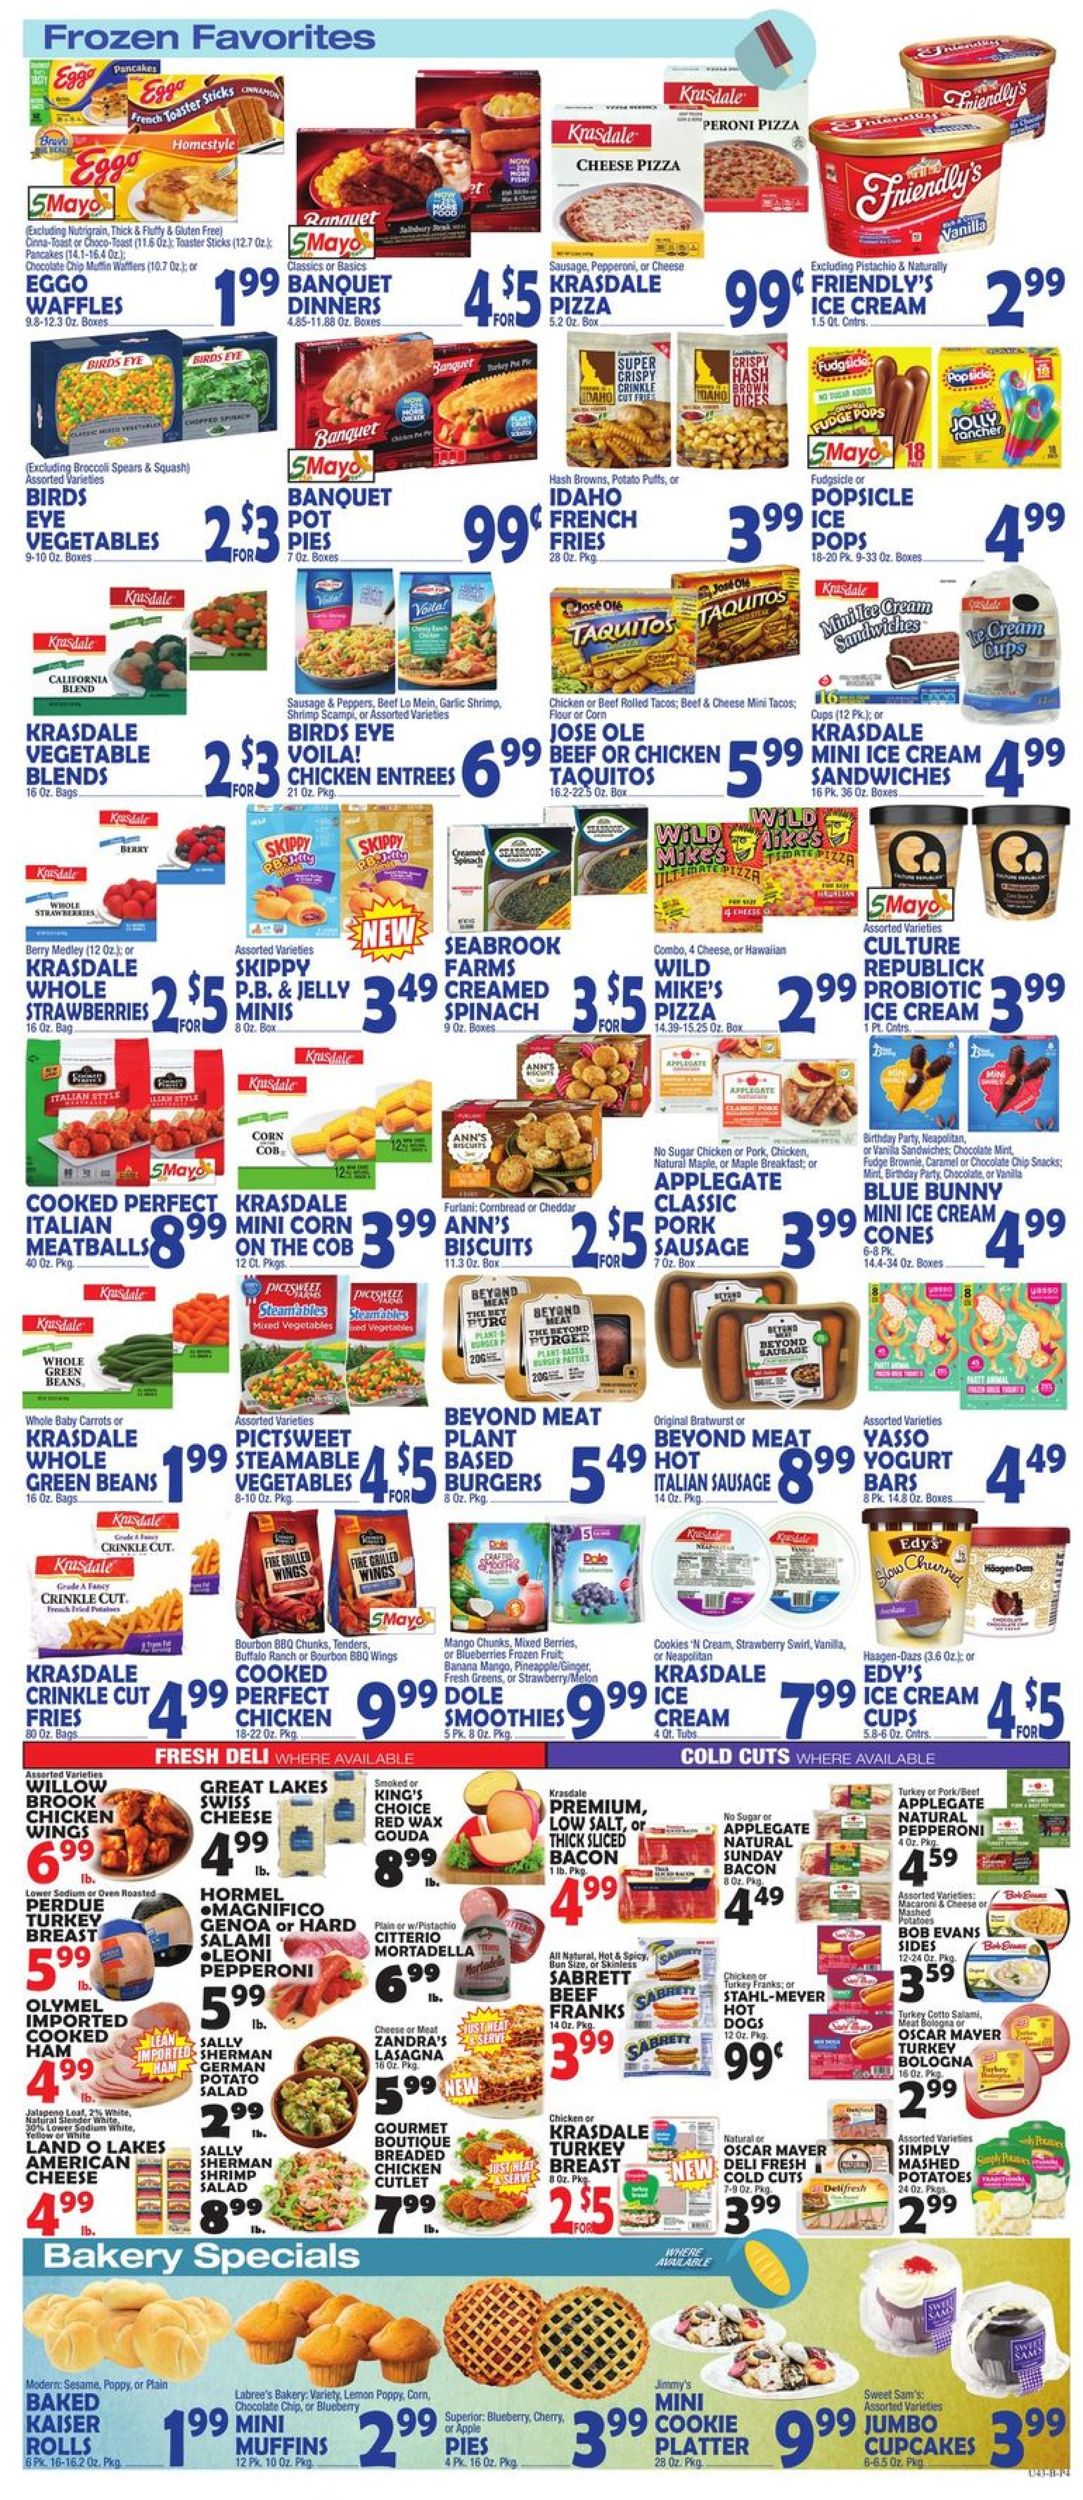 Catalogue Bravo Supermarkets from 05/03/2019